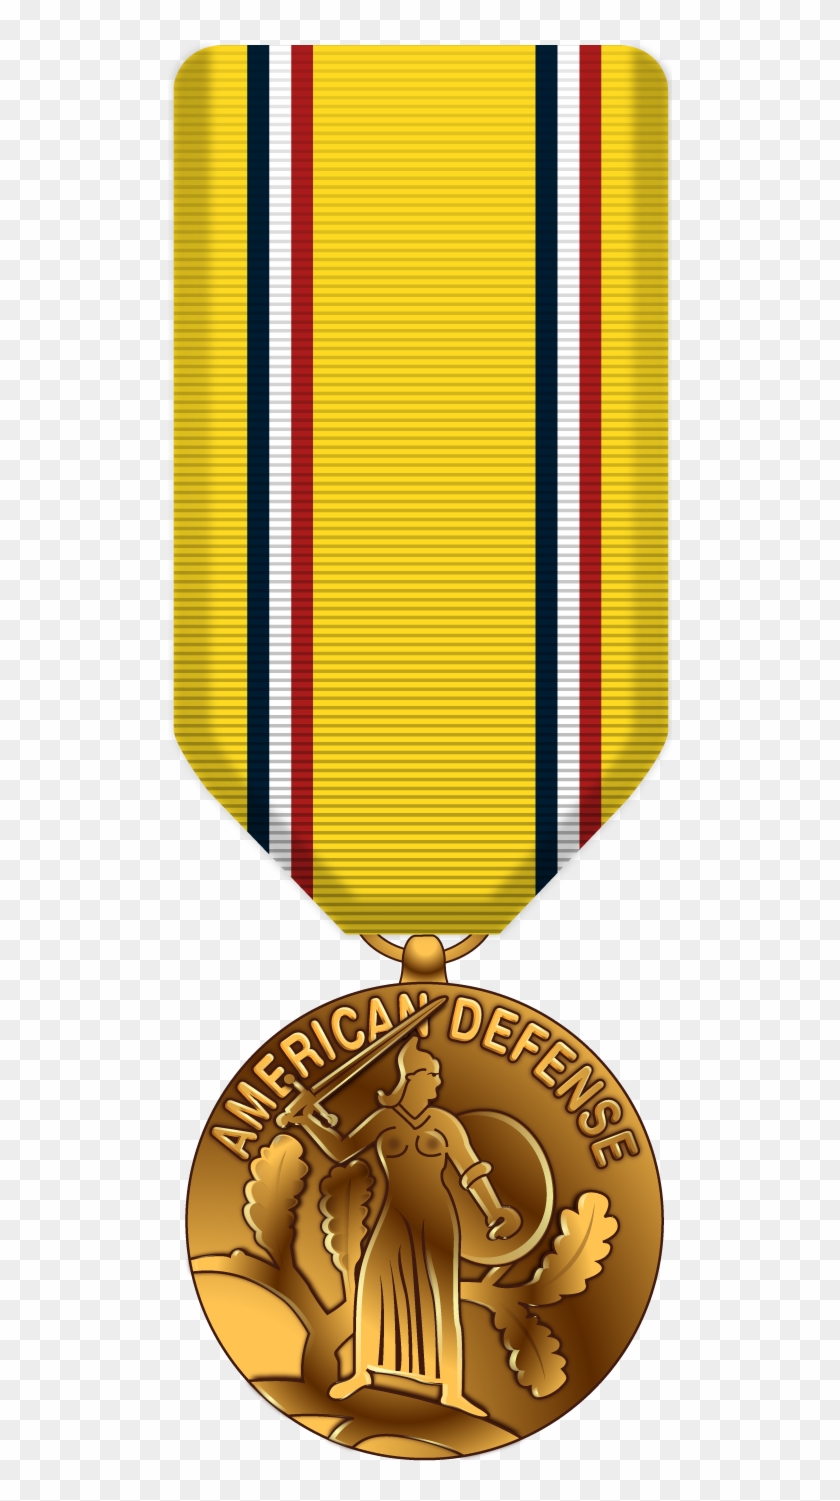 American Defense Service Medal - American Defense Service Medal Png Clipart #810638